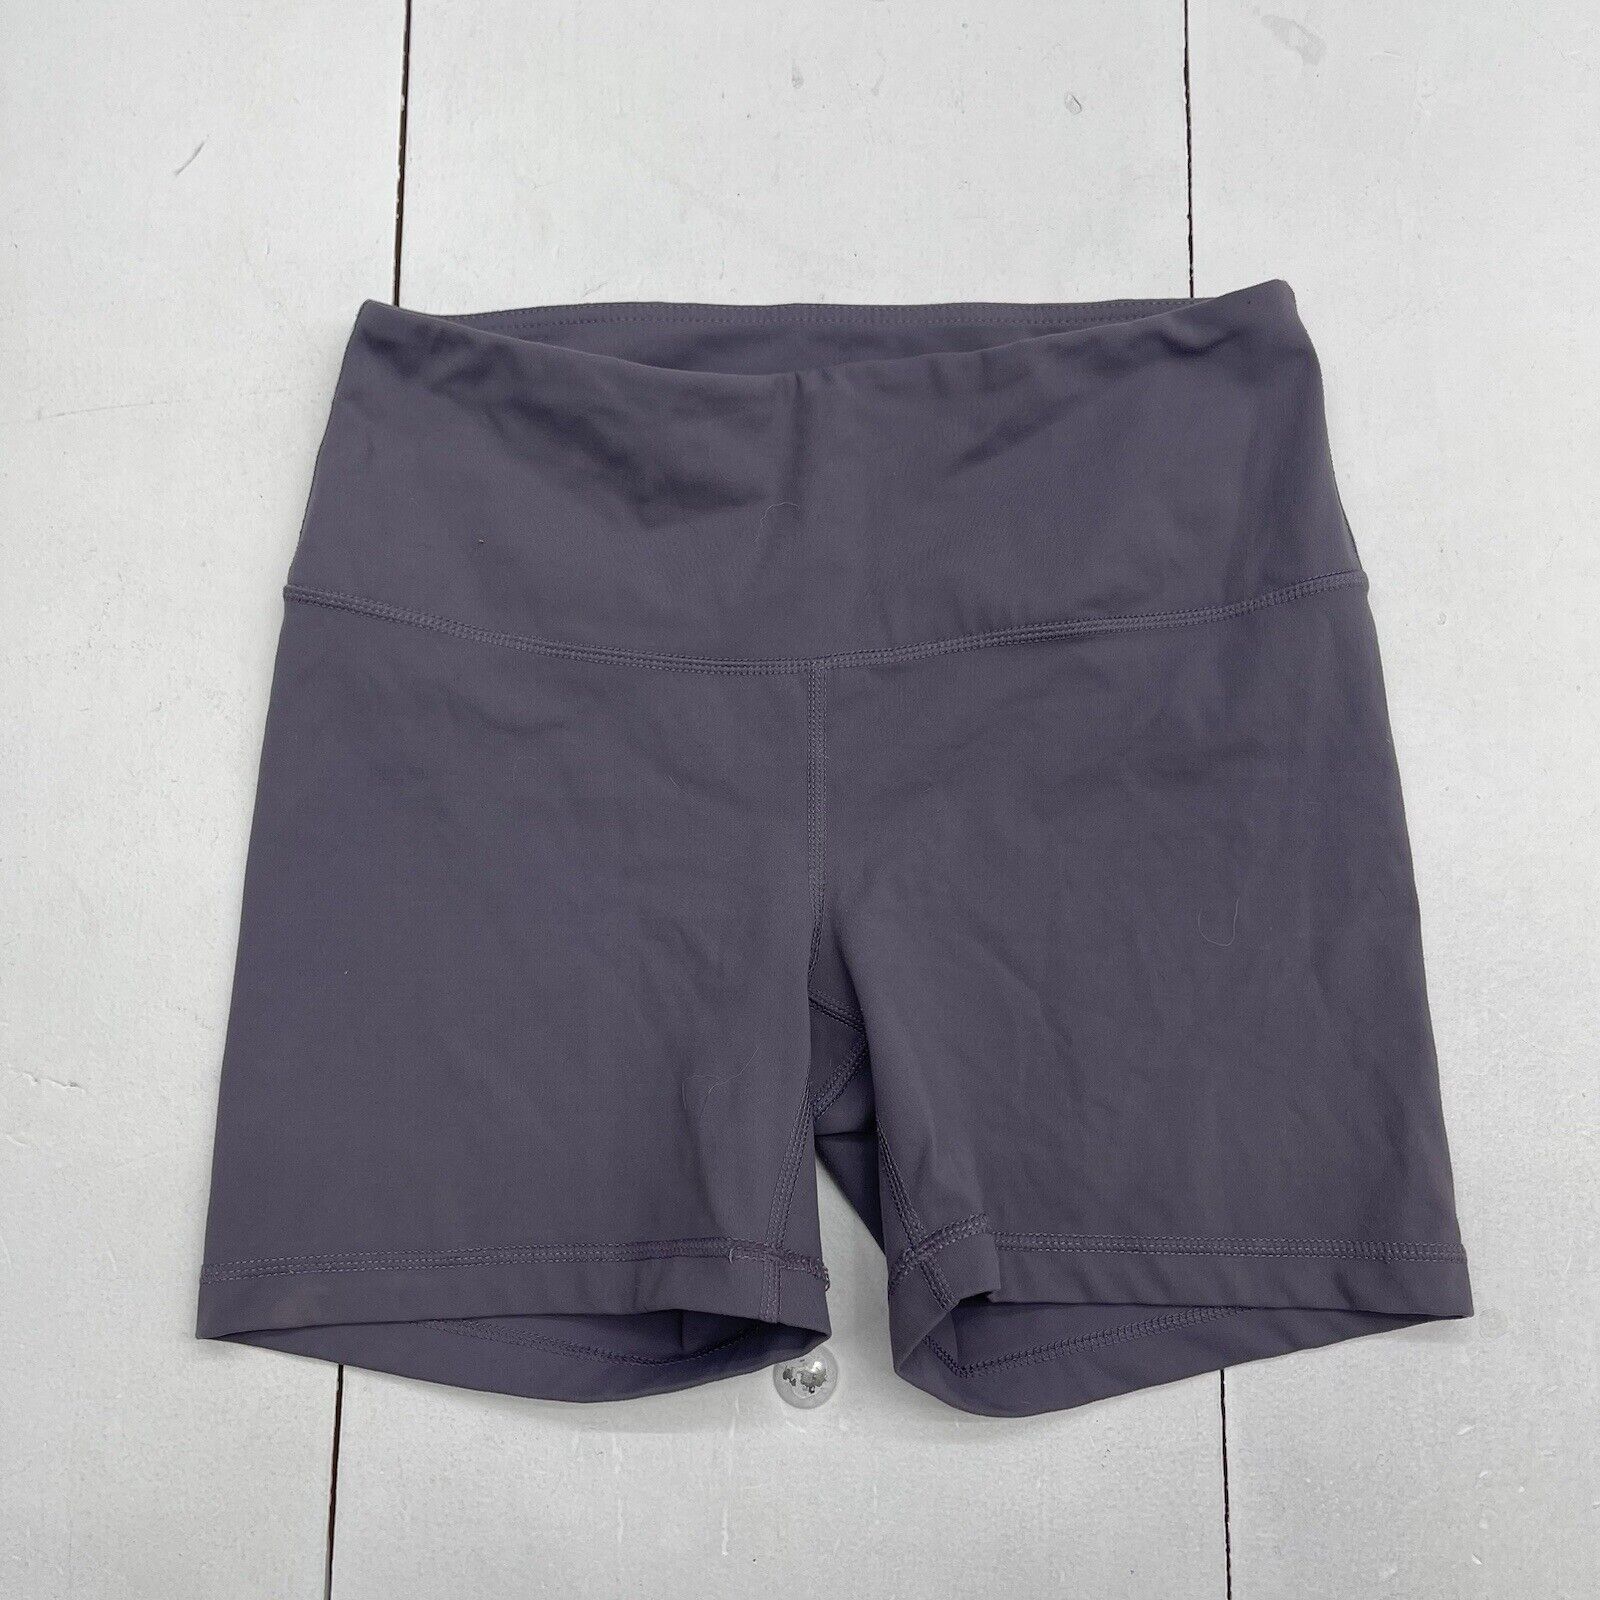 Yogalicious Lux Purple Biker Shorts Women’s Size Medium